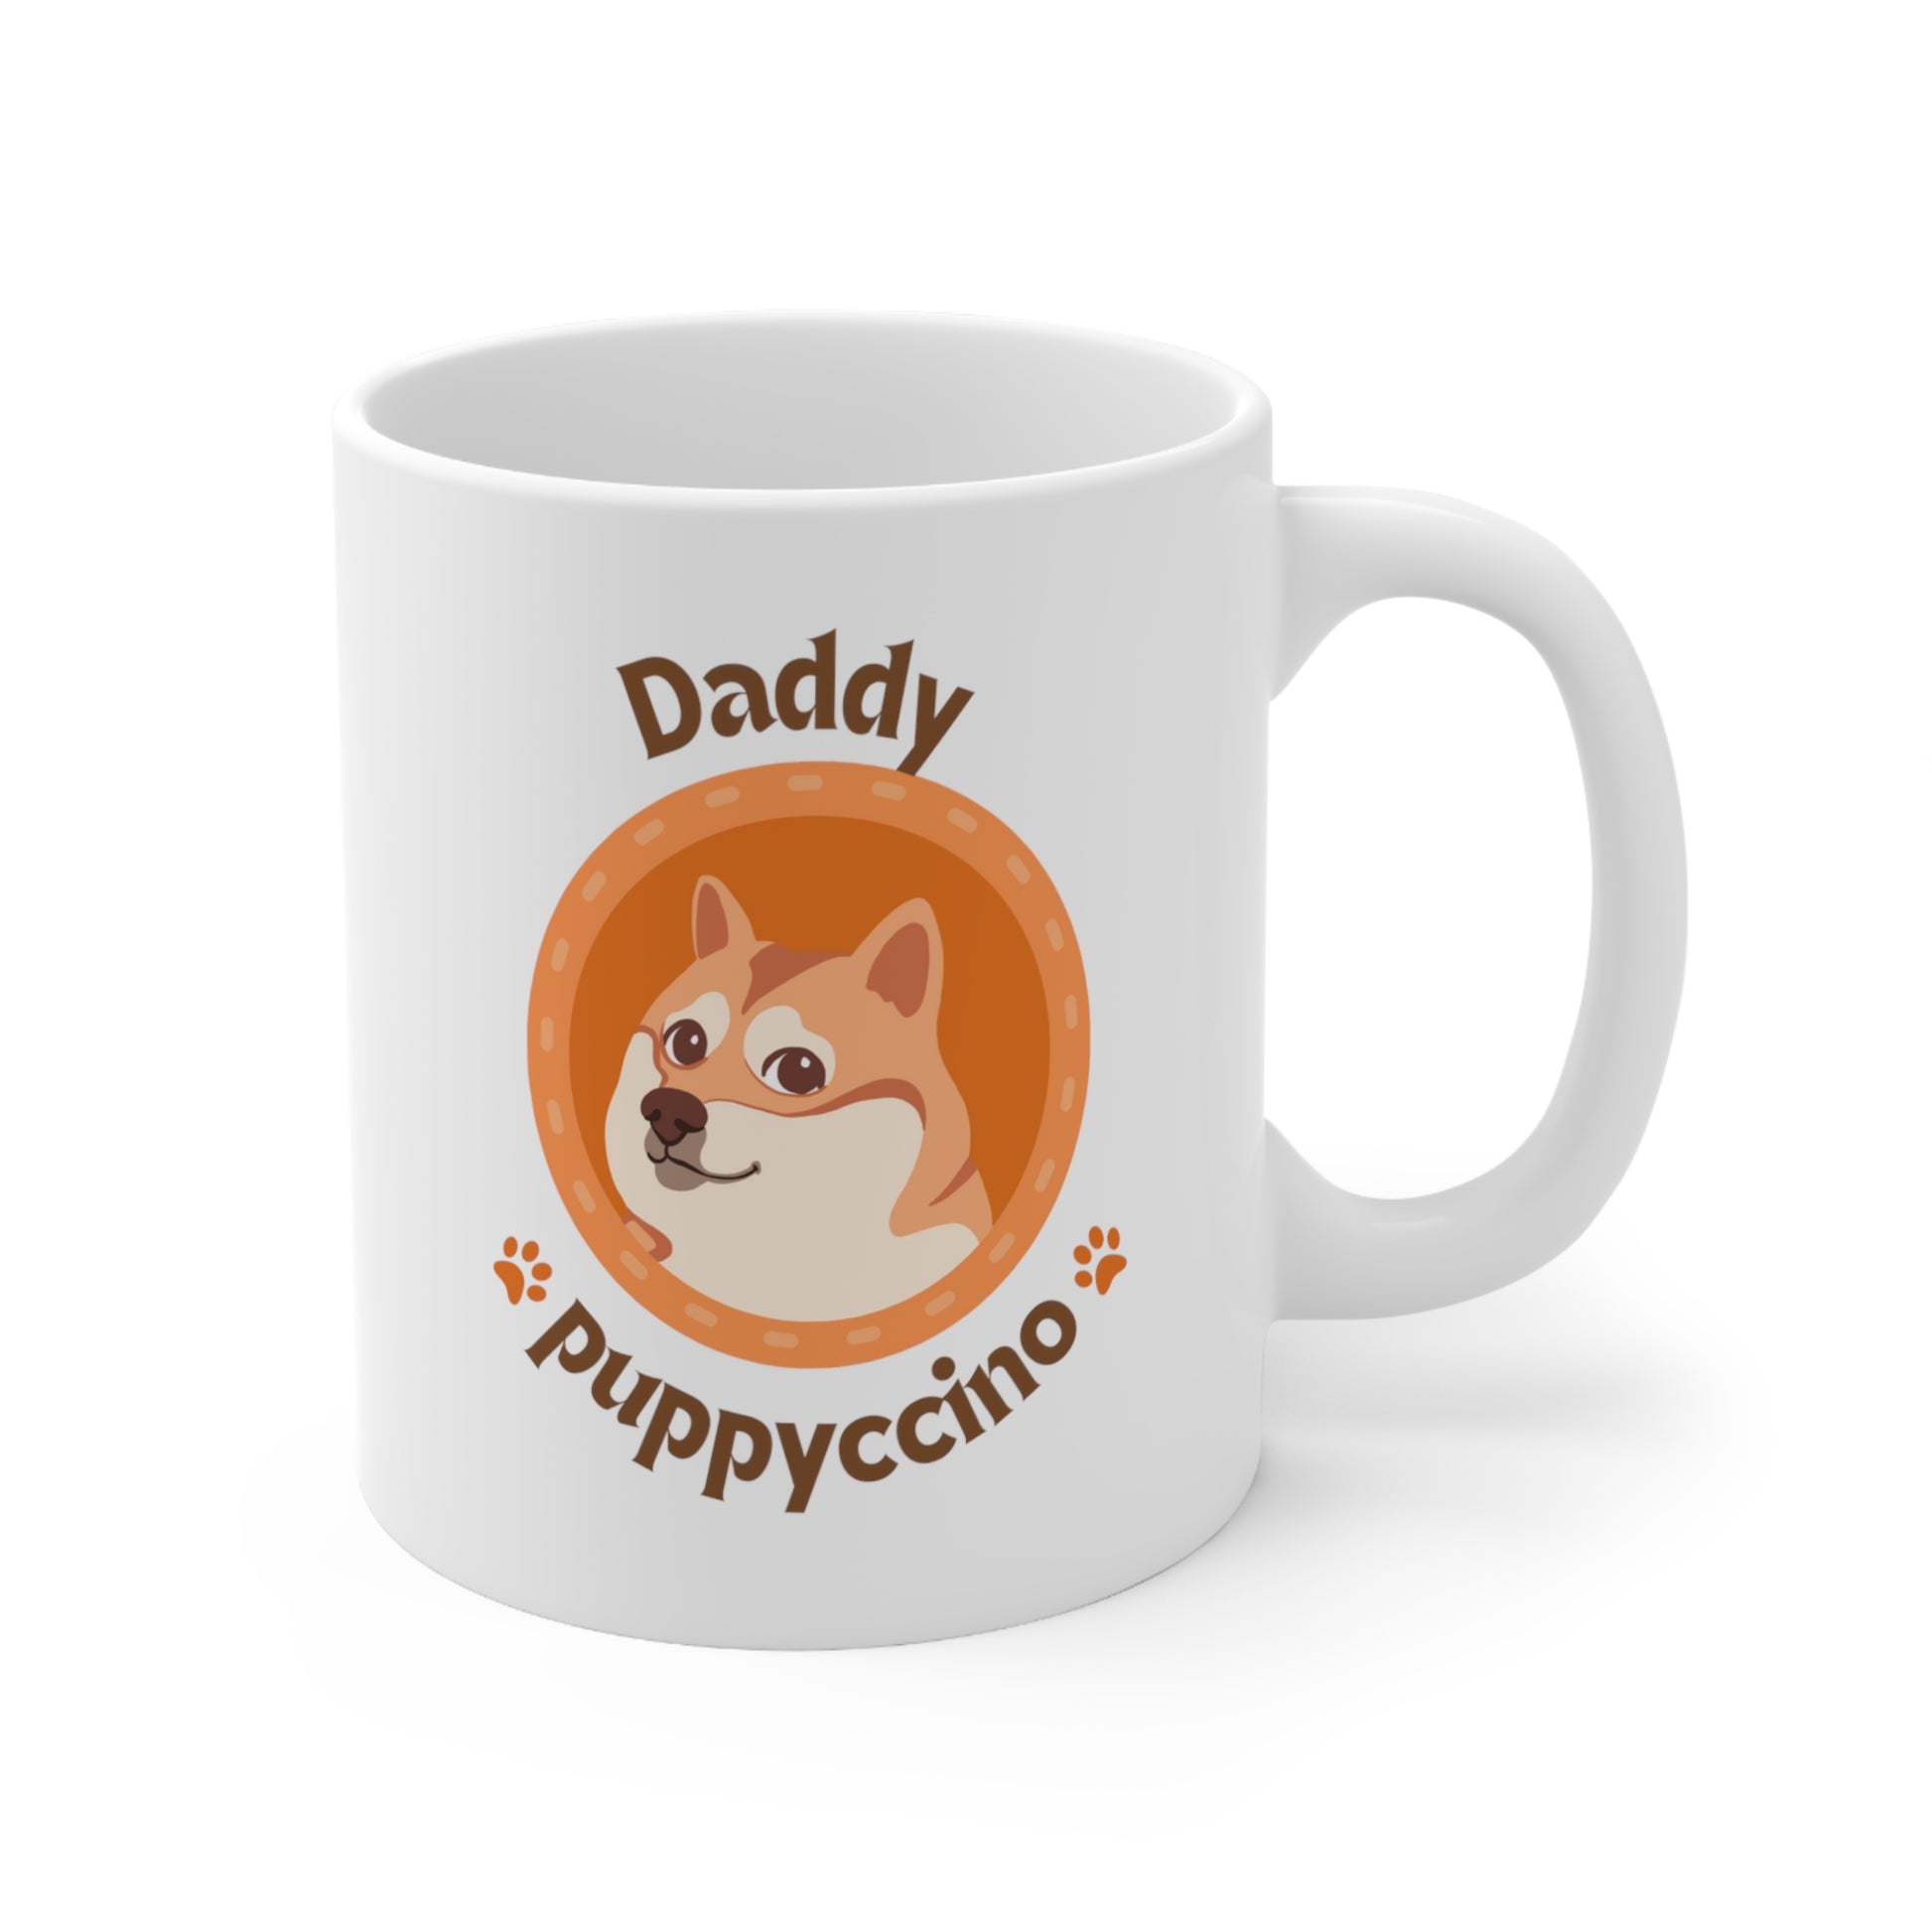 Daddy Puppyccino Ceramic Mug for Dog Lover